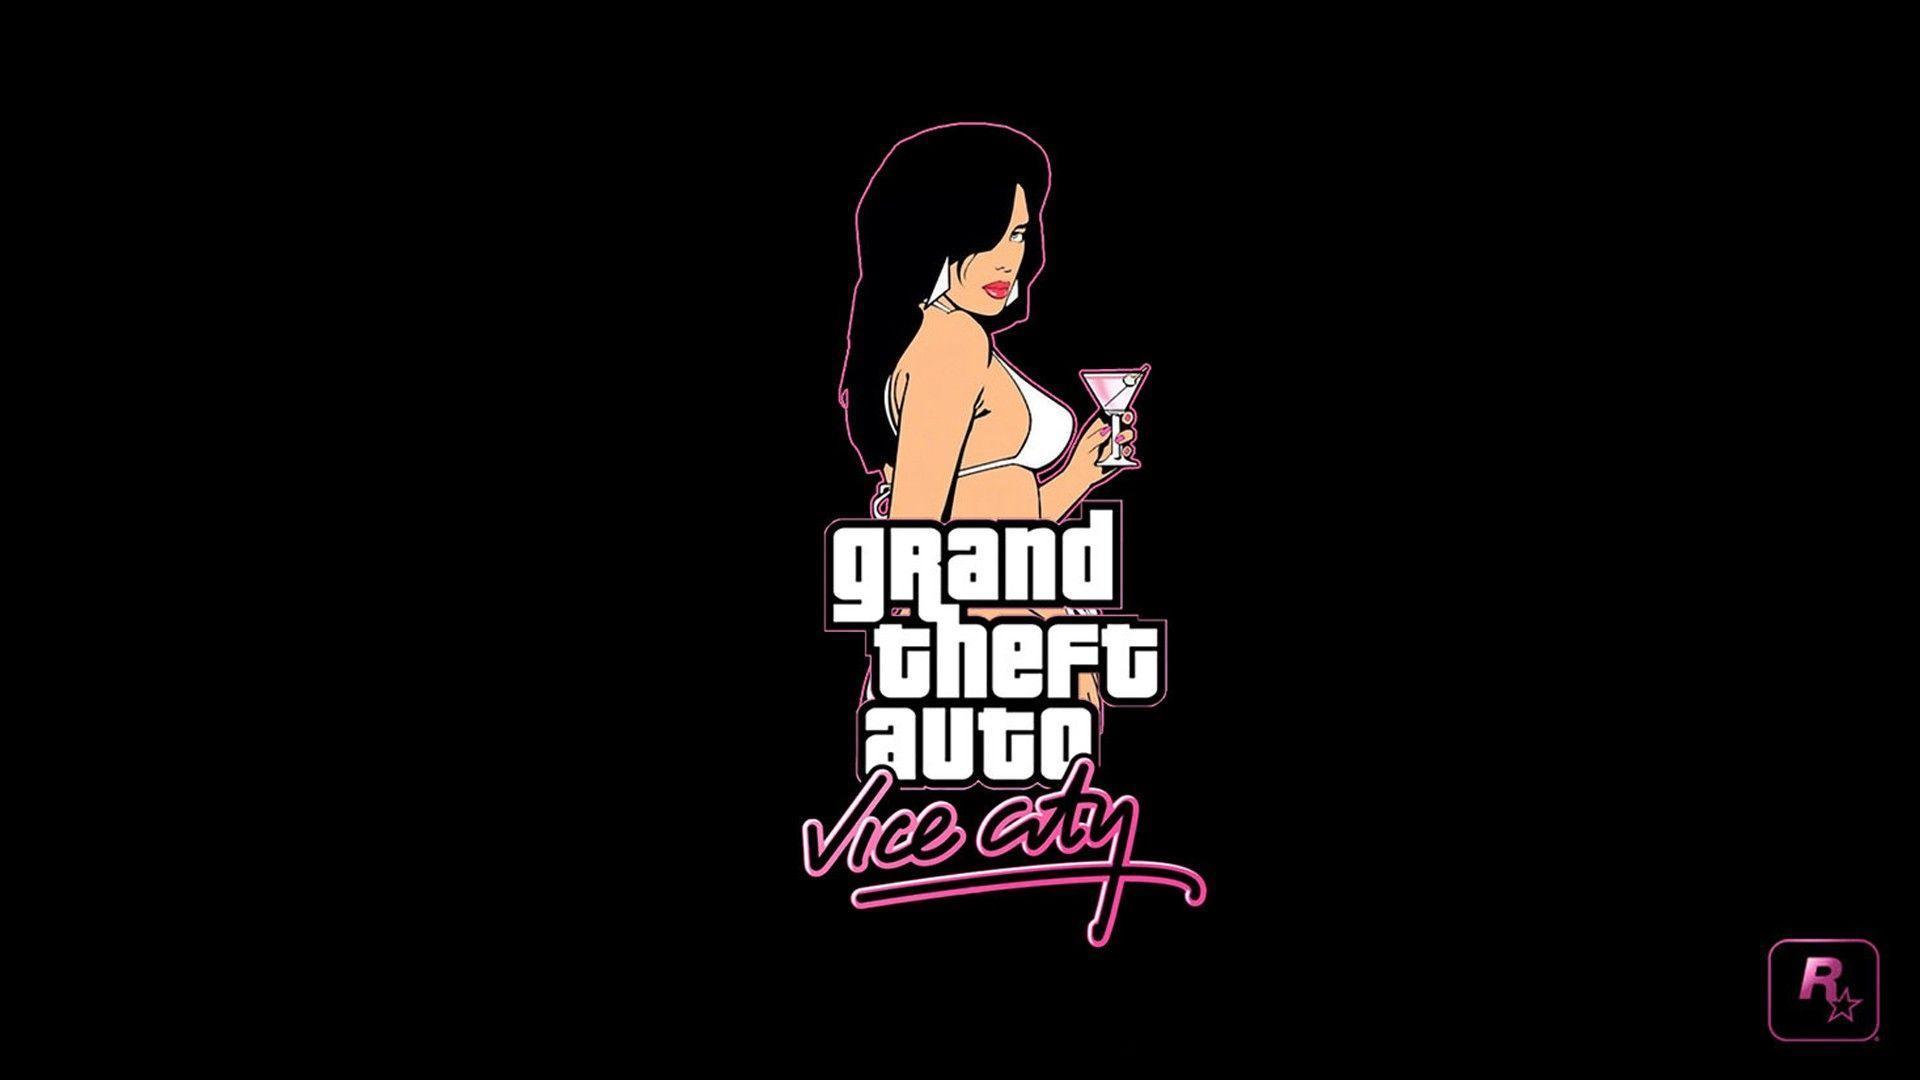 Gta Vice City, HD Games, 4k Wallpaper, Image, Background, Photo